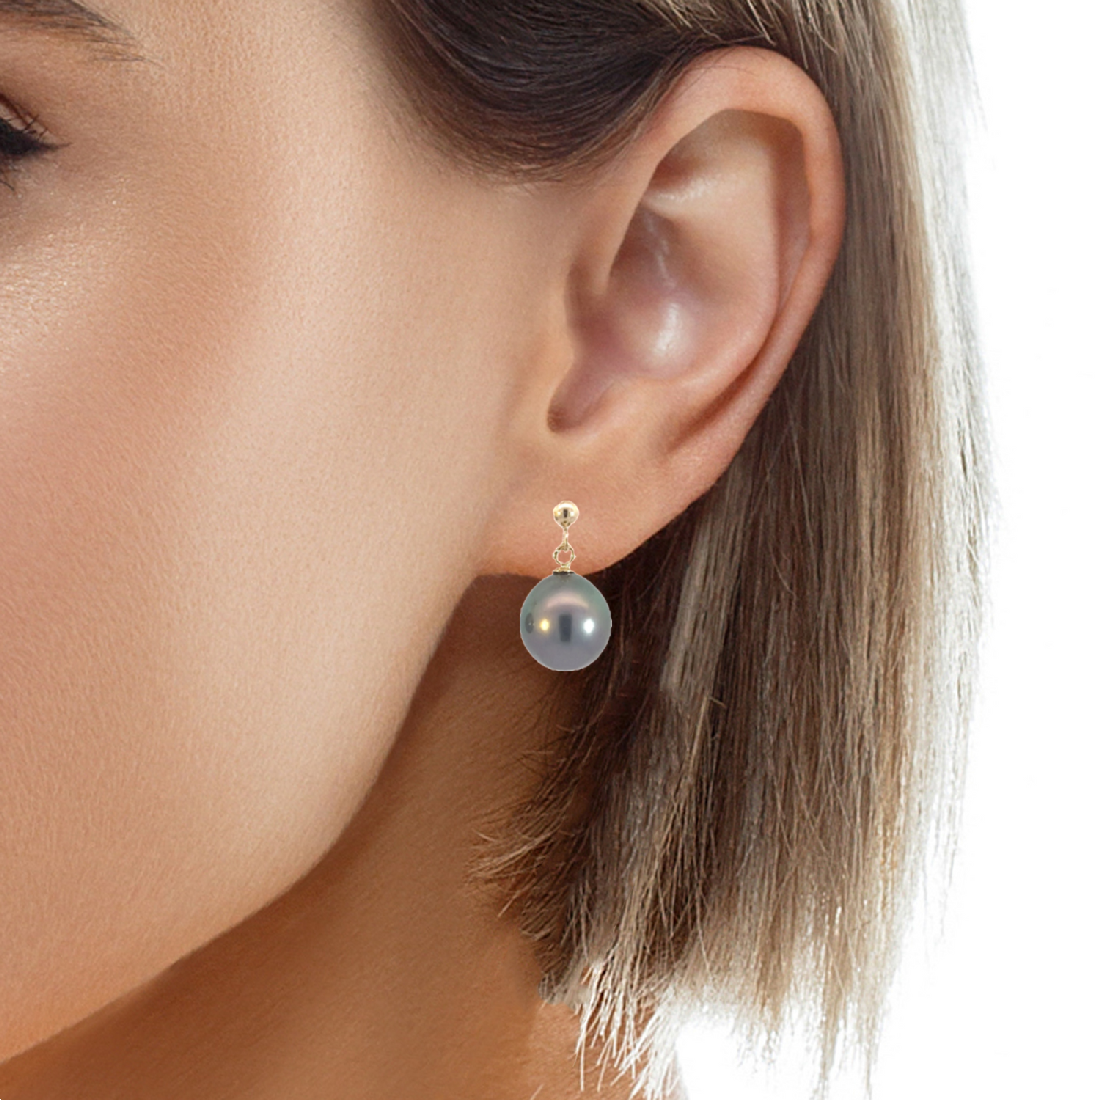 Aggregate 150+ black pearl earrings australia best